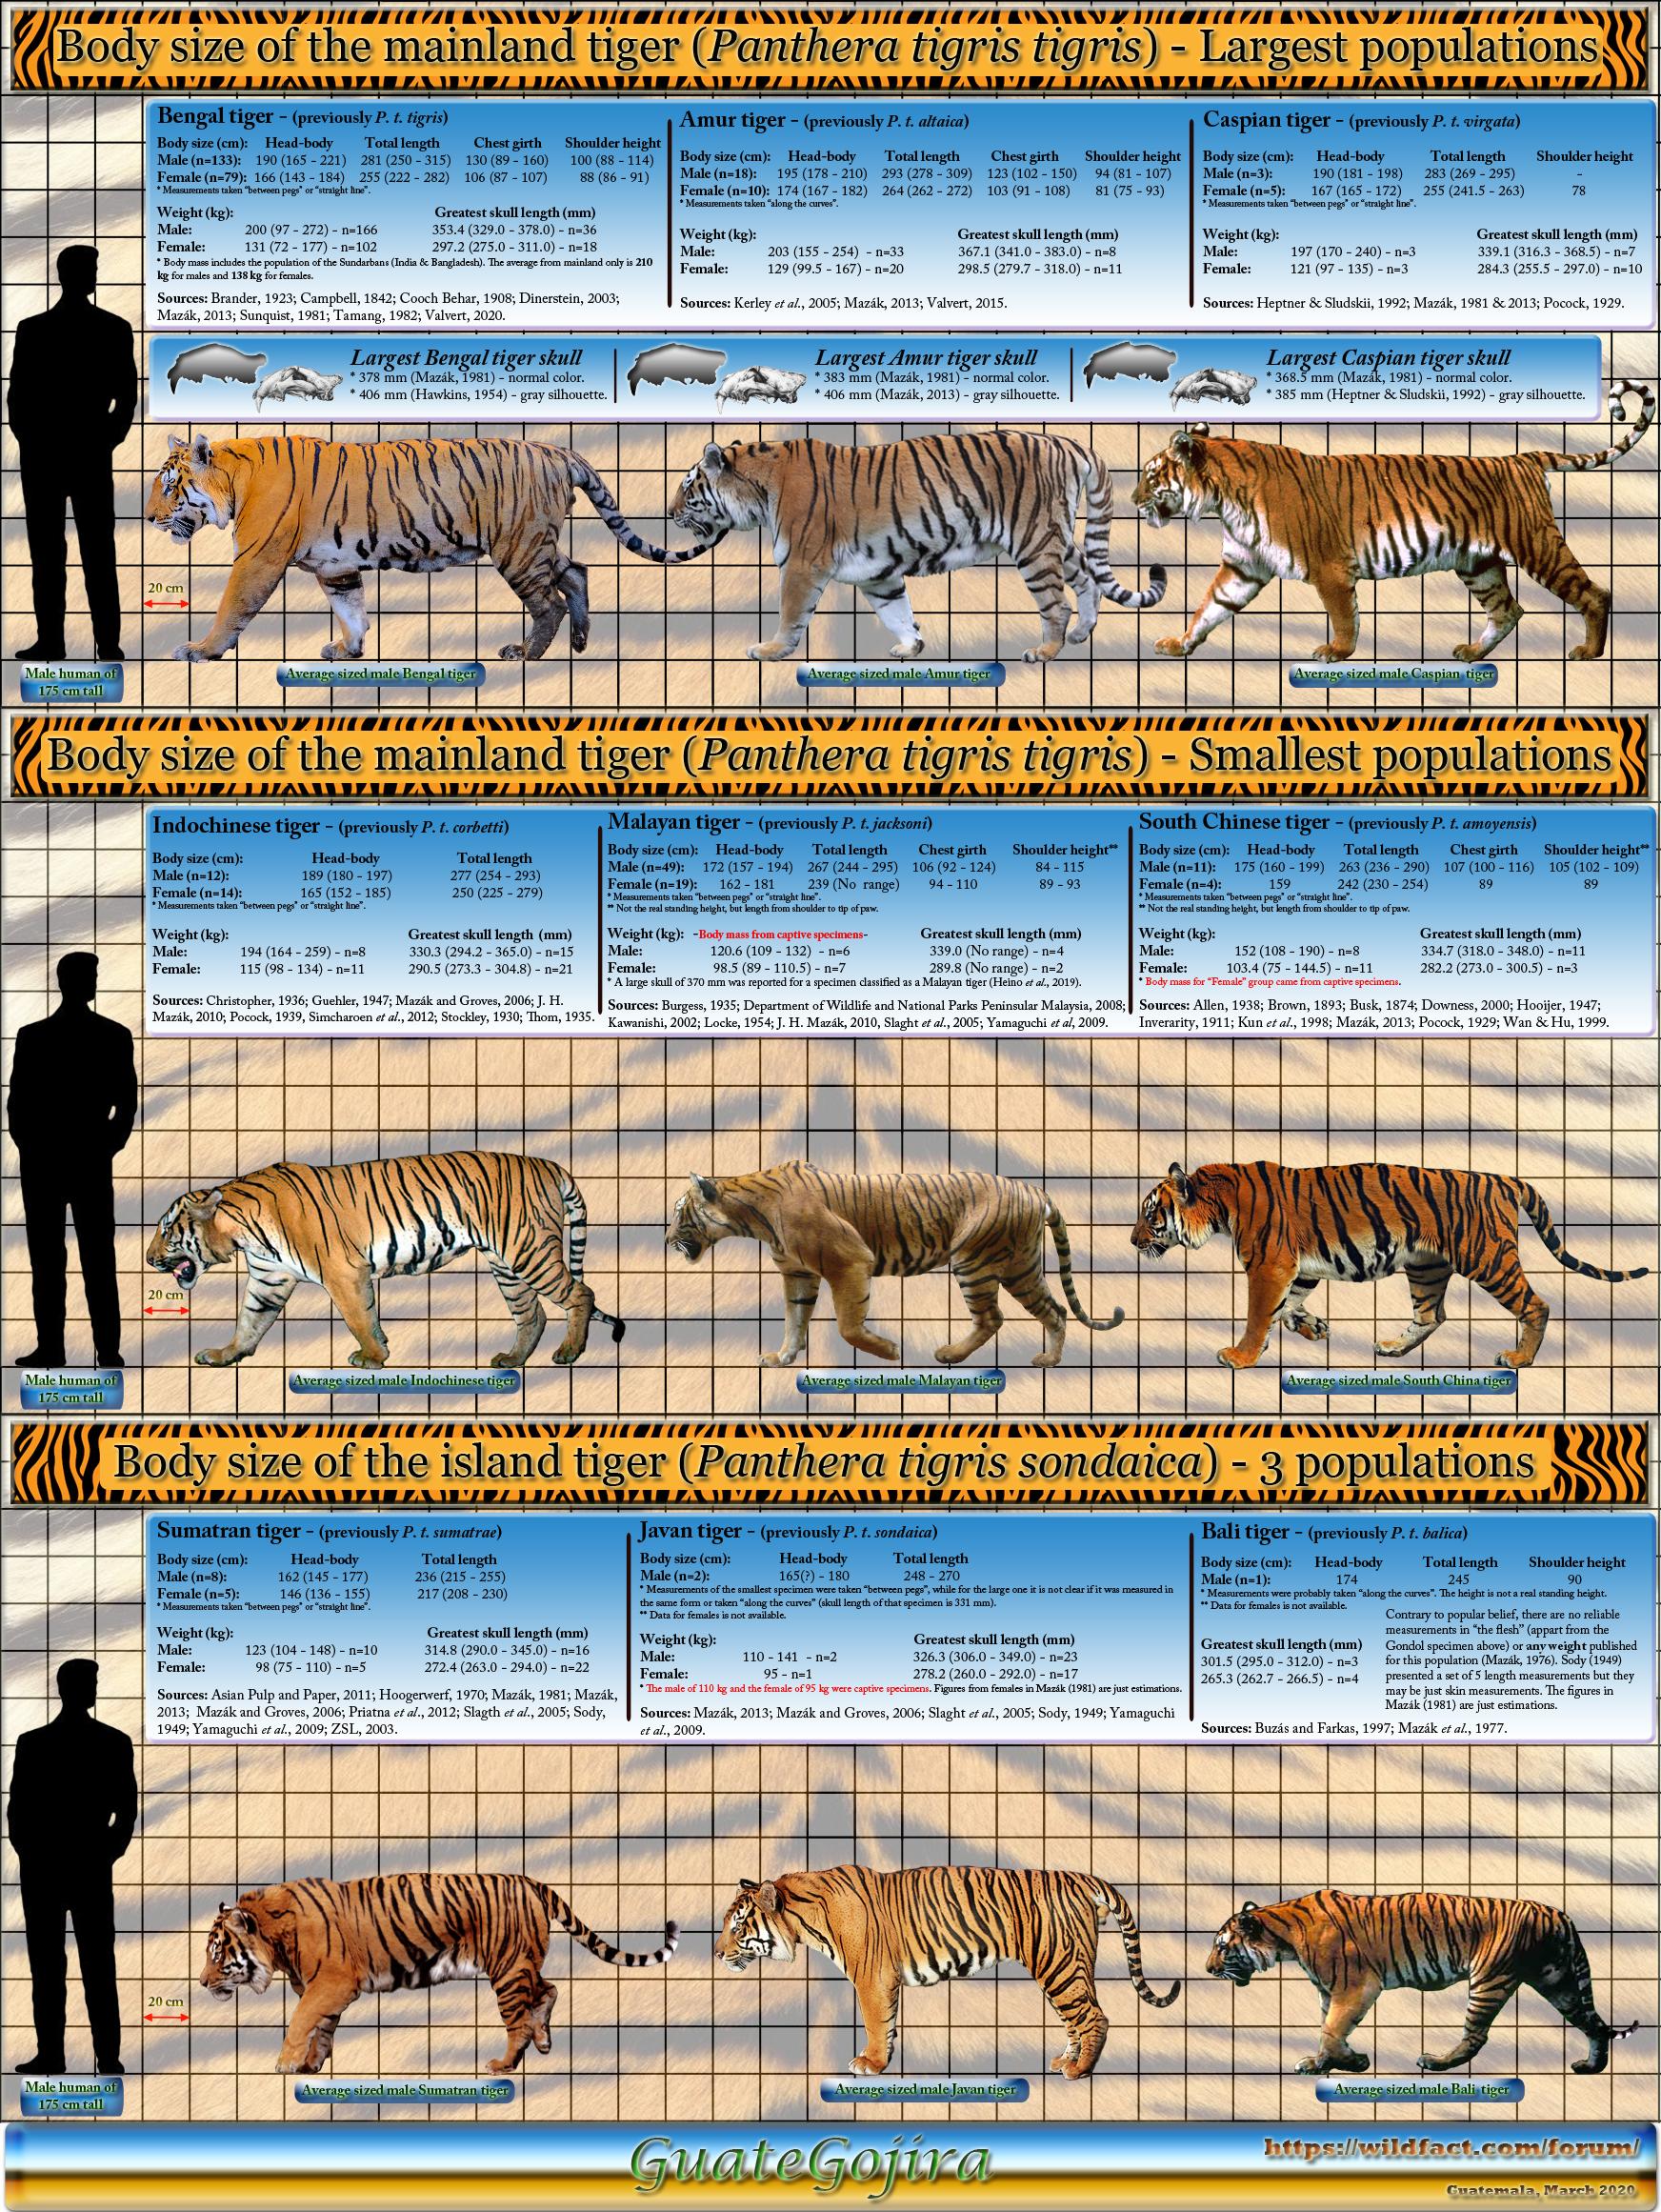 Animal Size Comparison | Frontier Forums